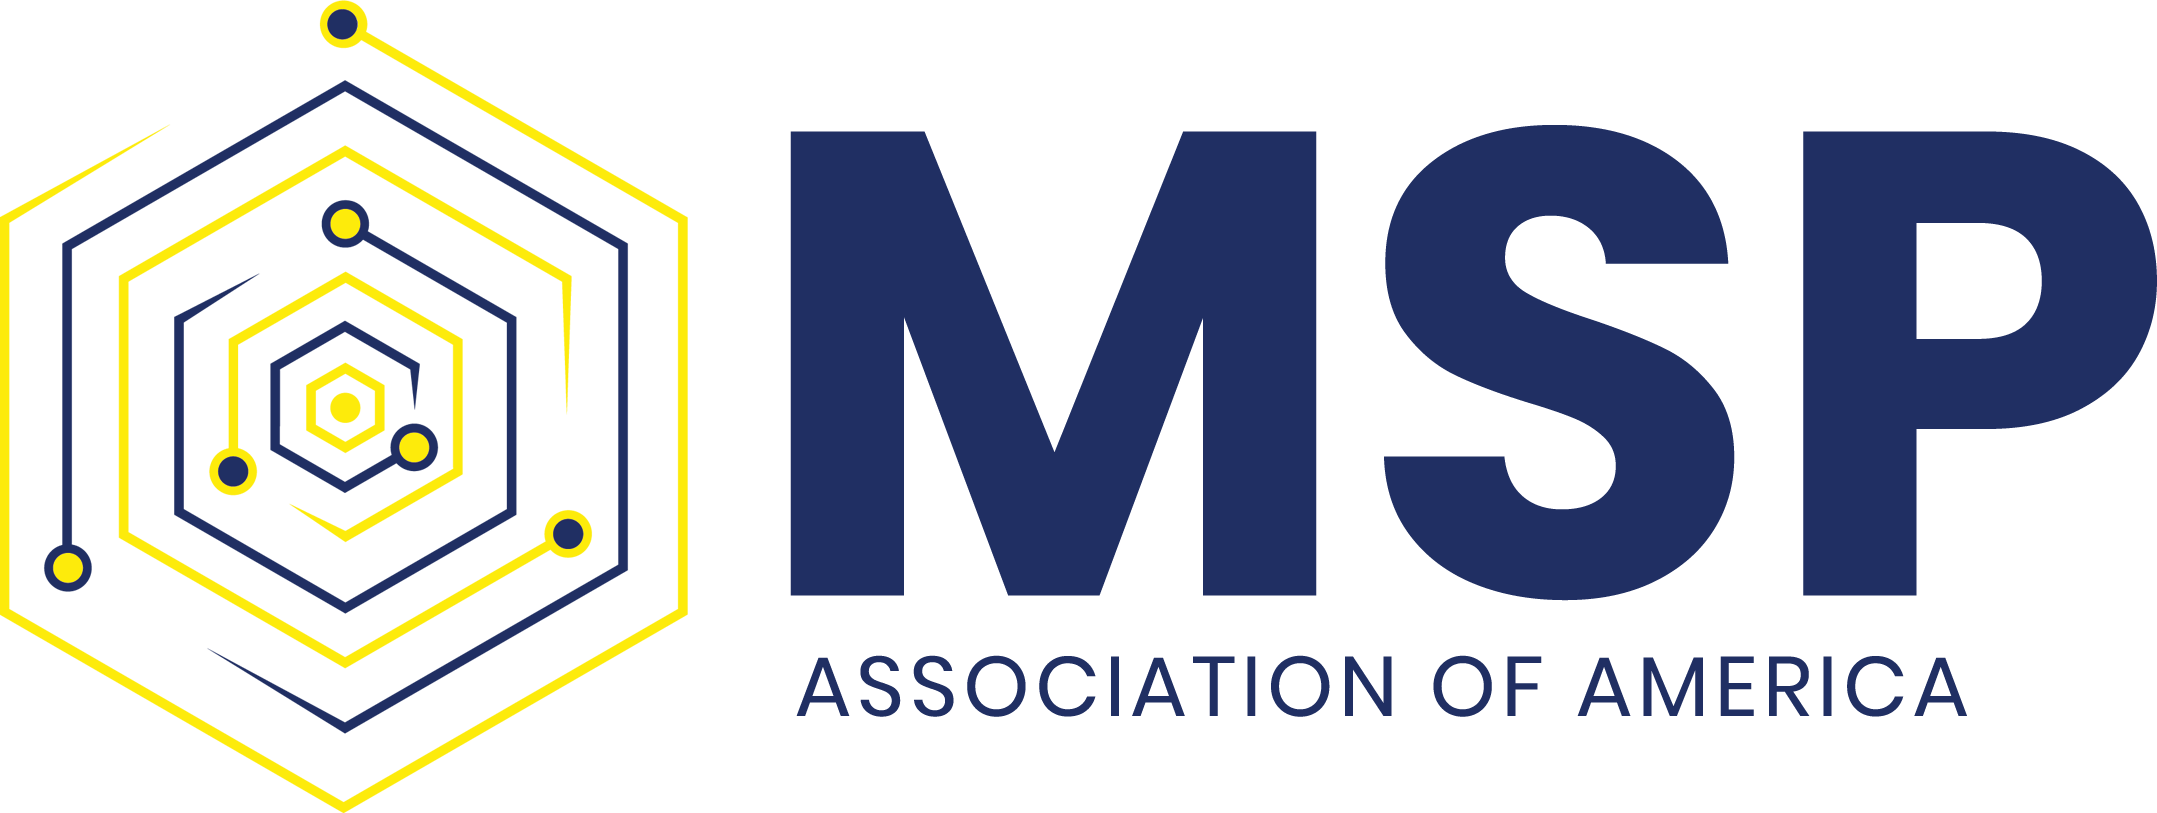 MSP Meaning | MSP Association of America